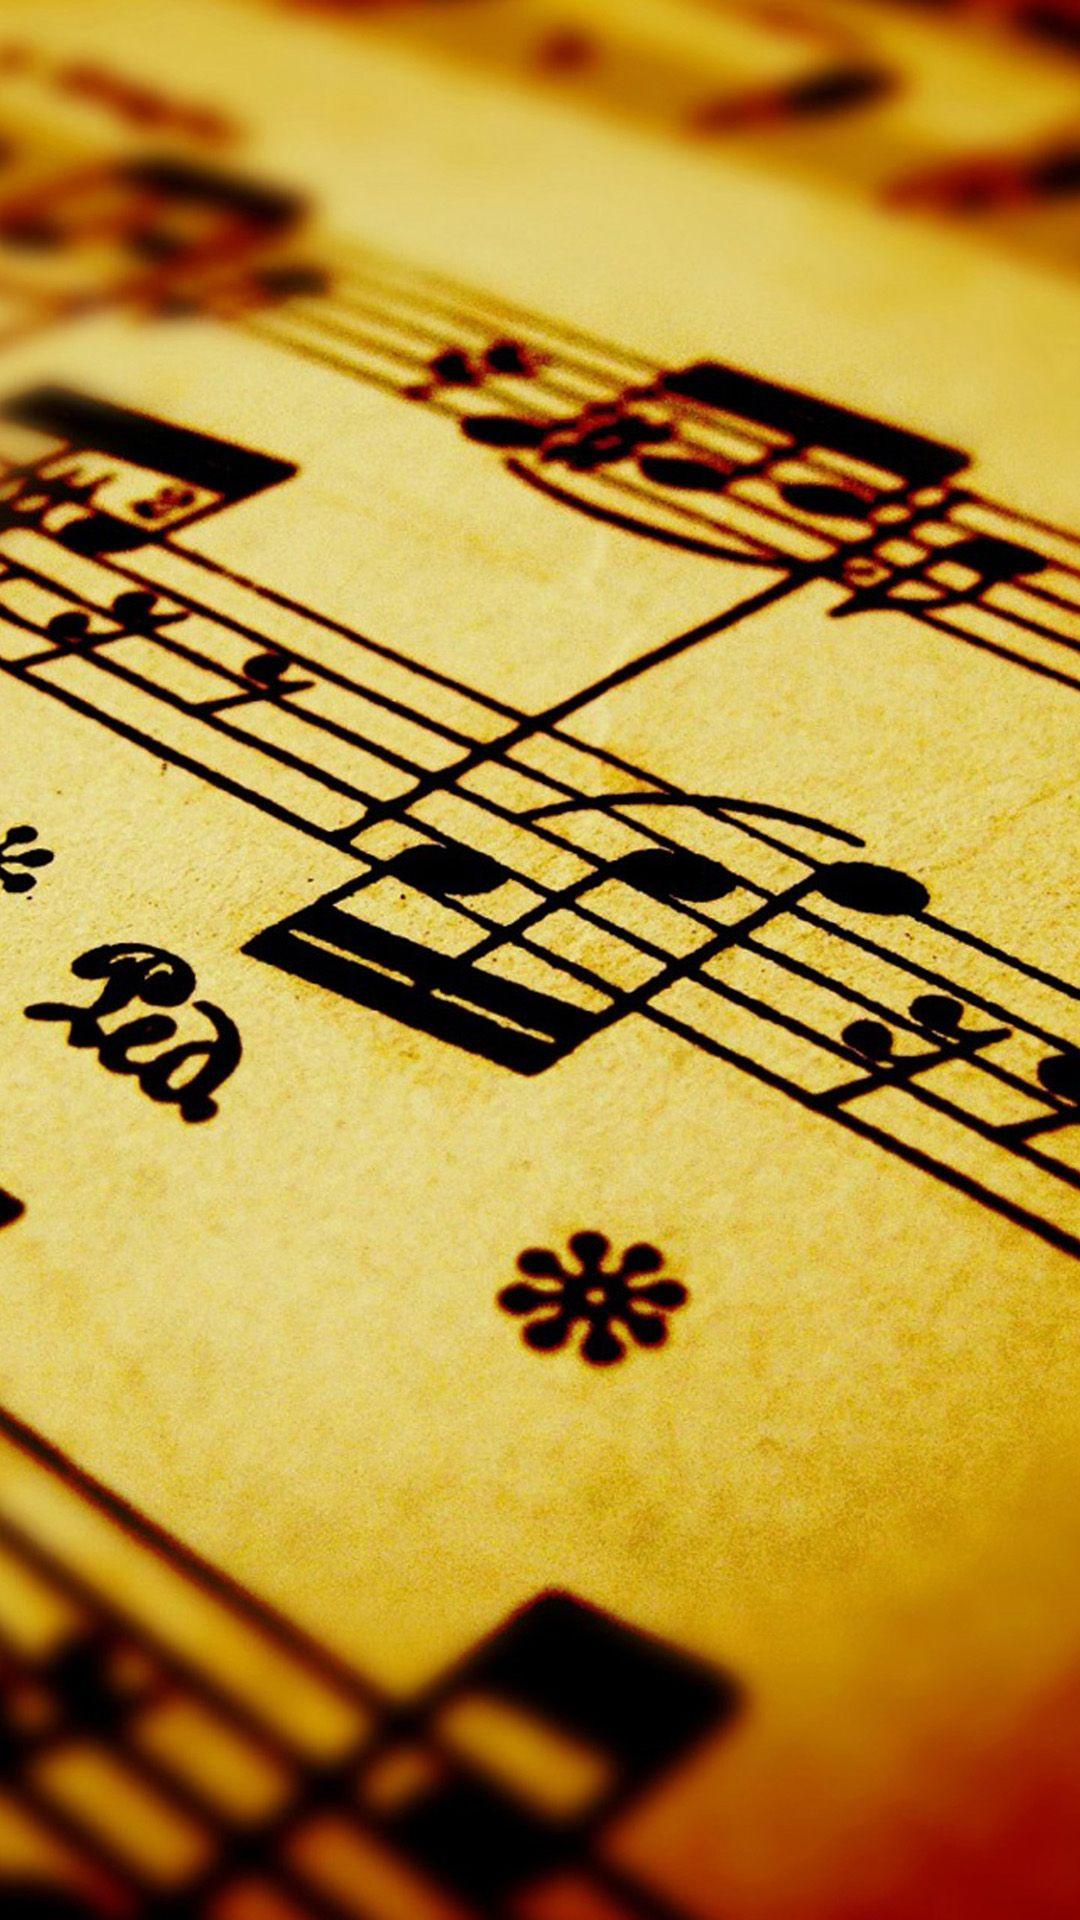 Music Notes. Samsung Galaxy S5 Wallpaper. Music